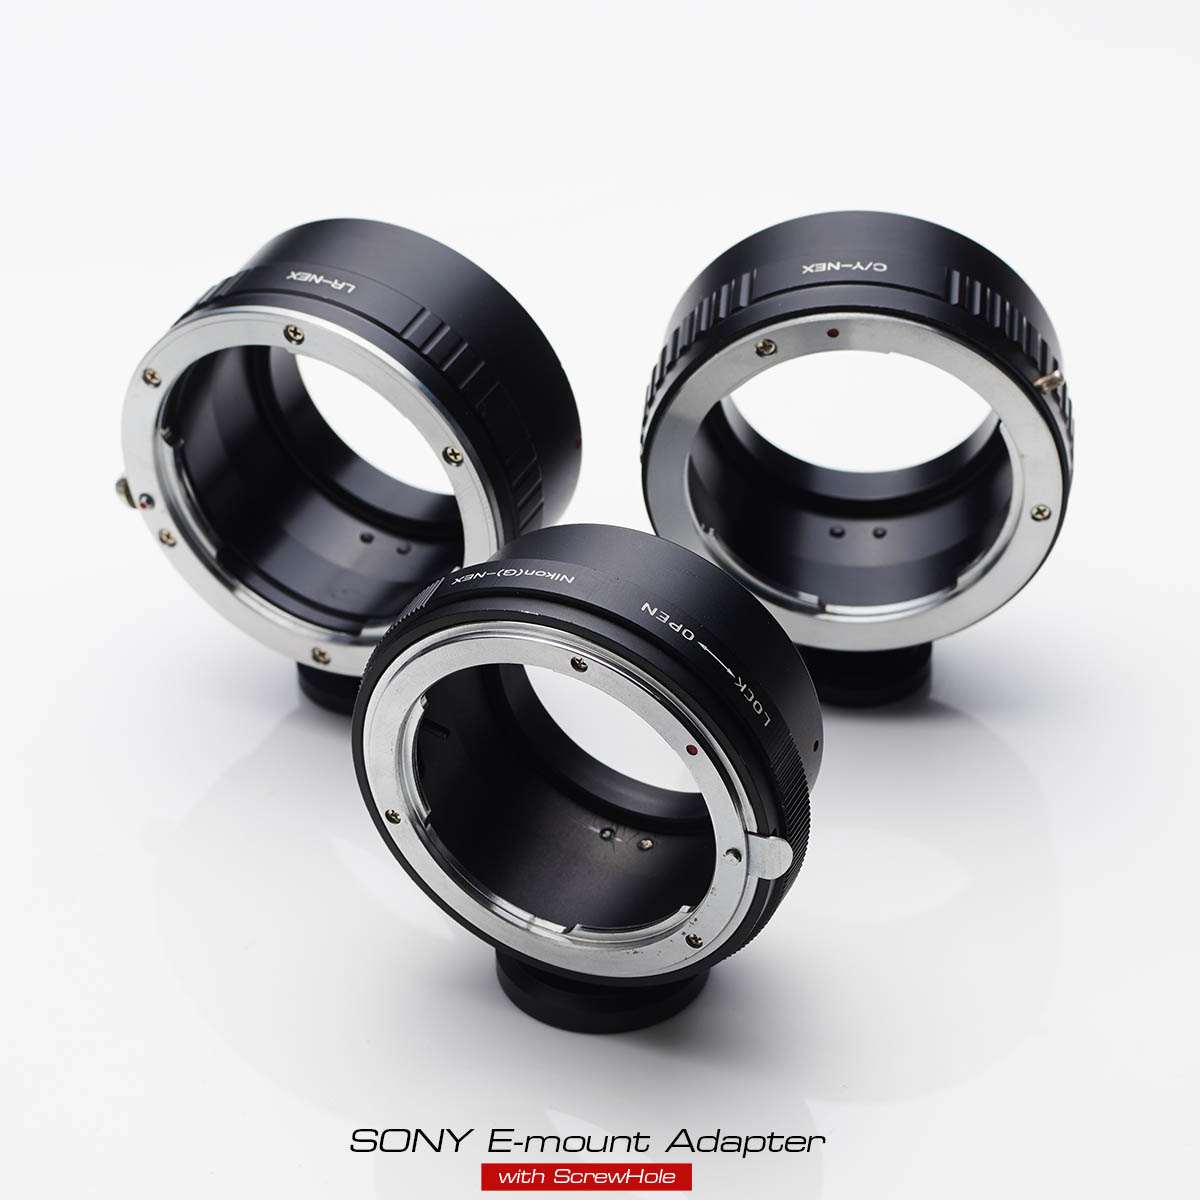 Sony Eマウント用マウントアダプタ（三脚座付） | 使える機材のセレクトショップ使える機材のセレクトショップ